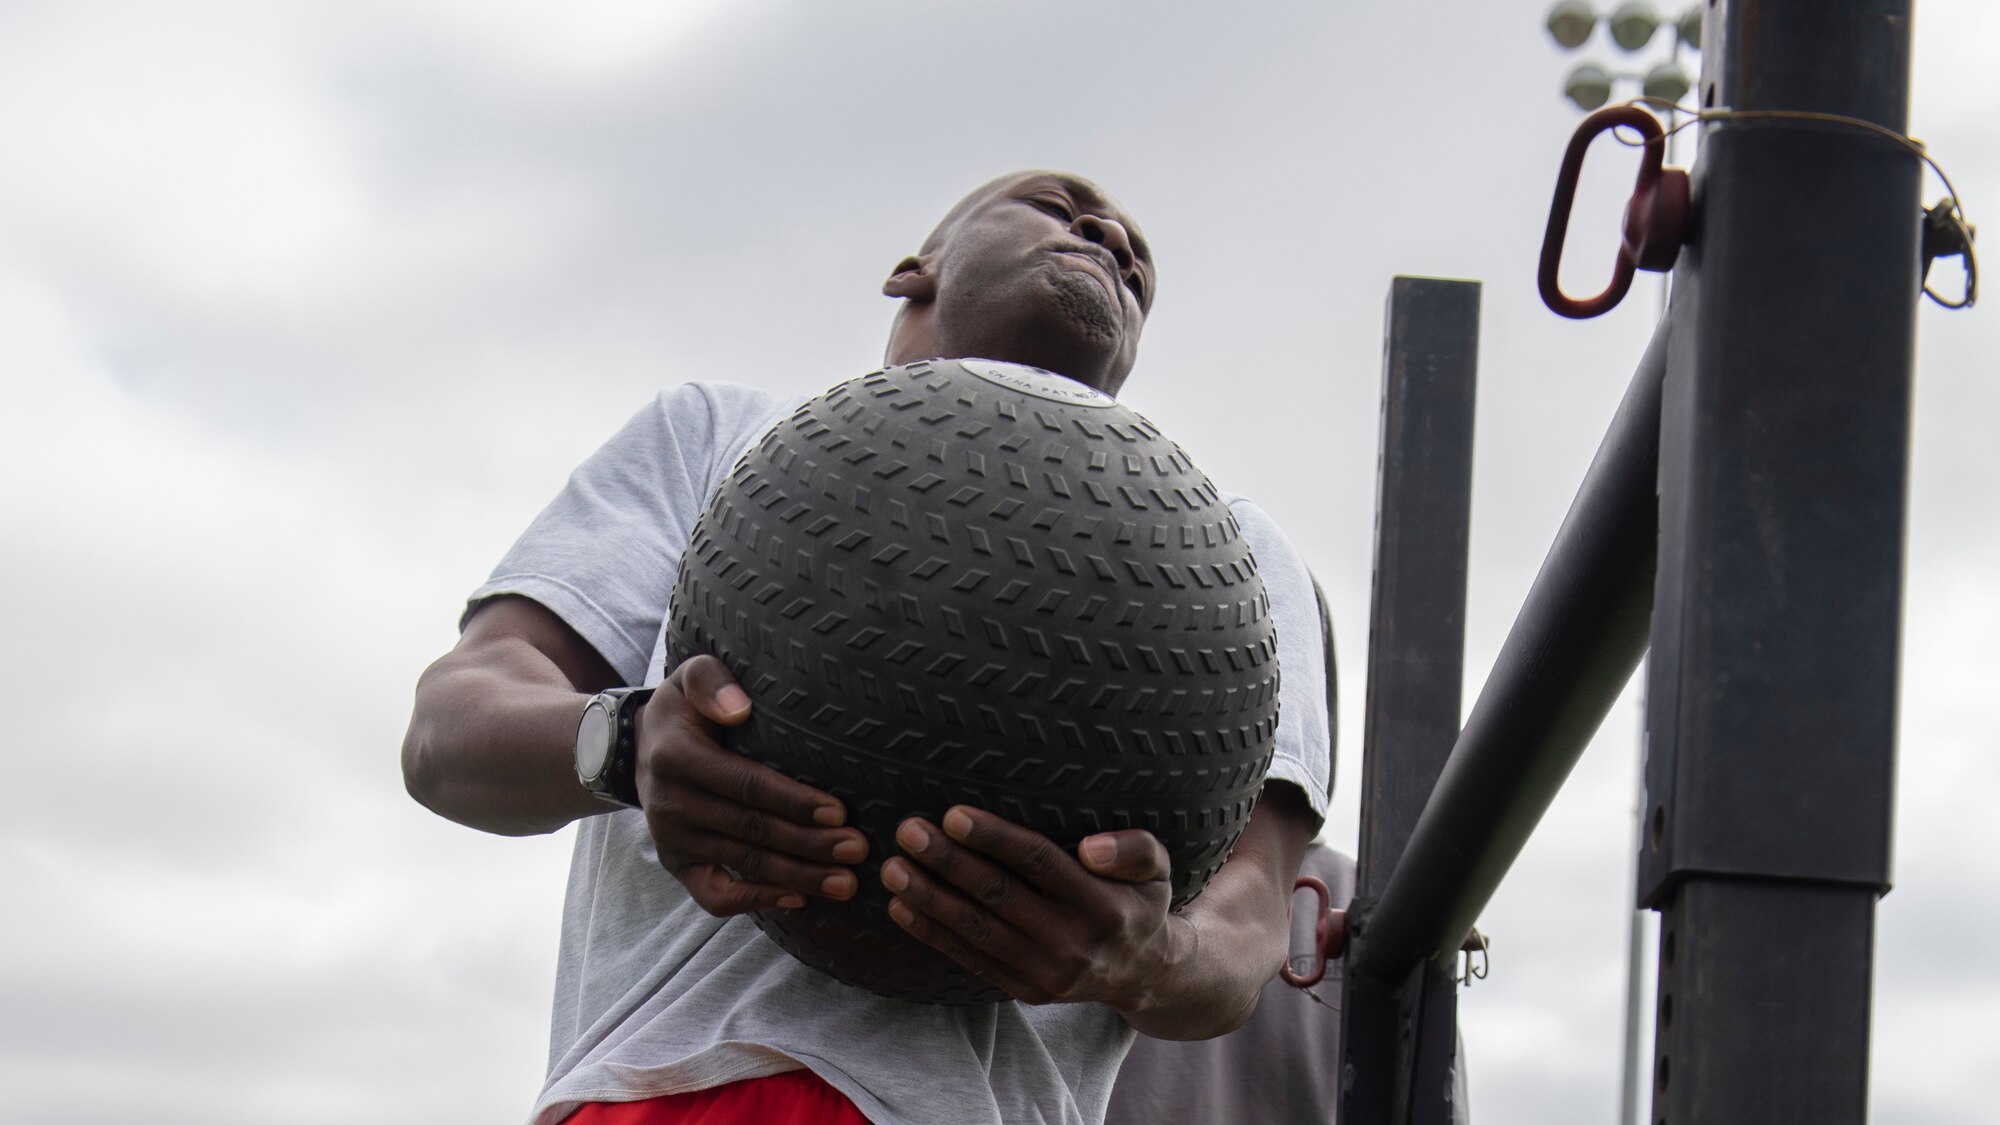 A man strains as he lifts a heavy medicine ball over a raised bar.